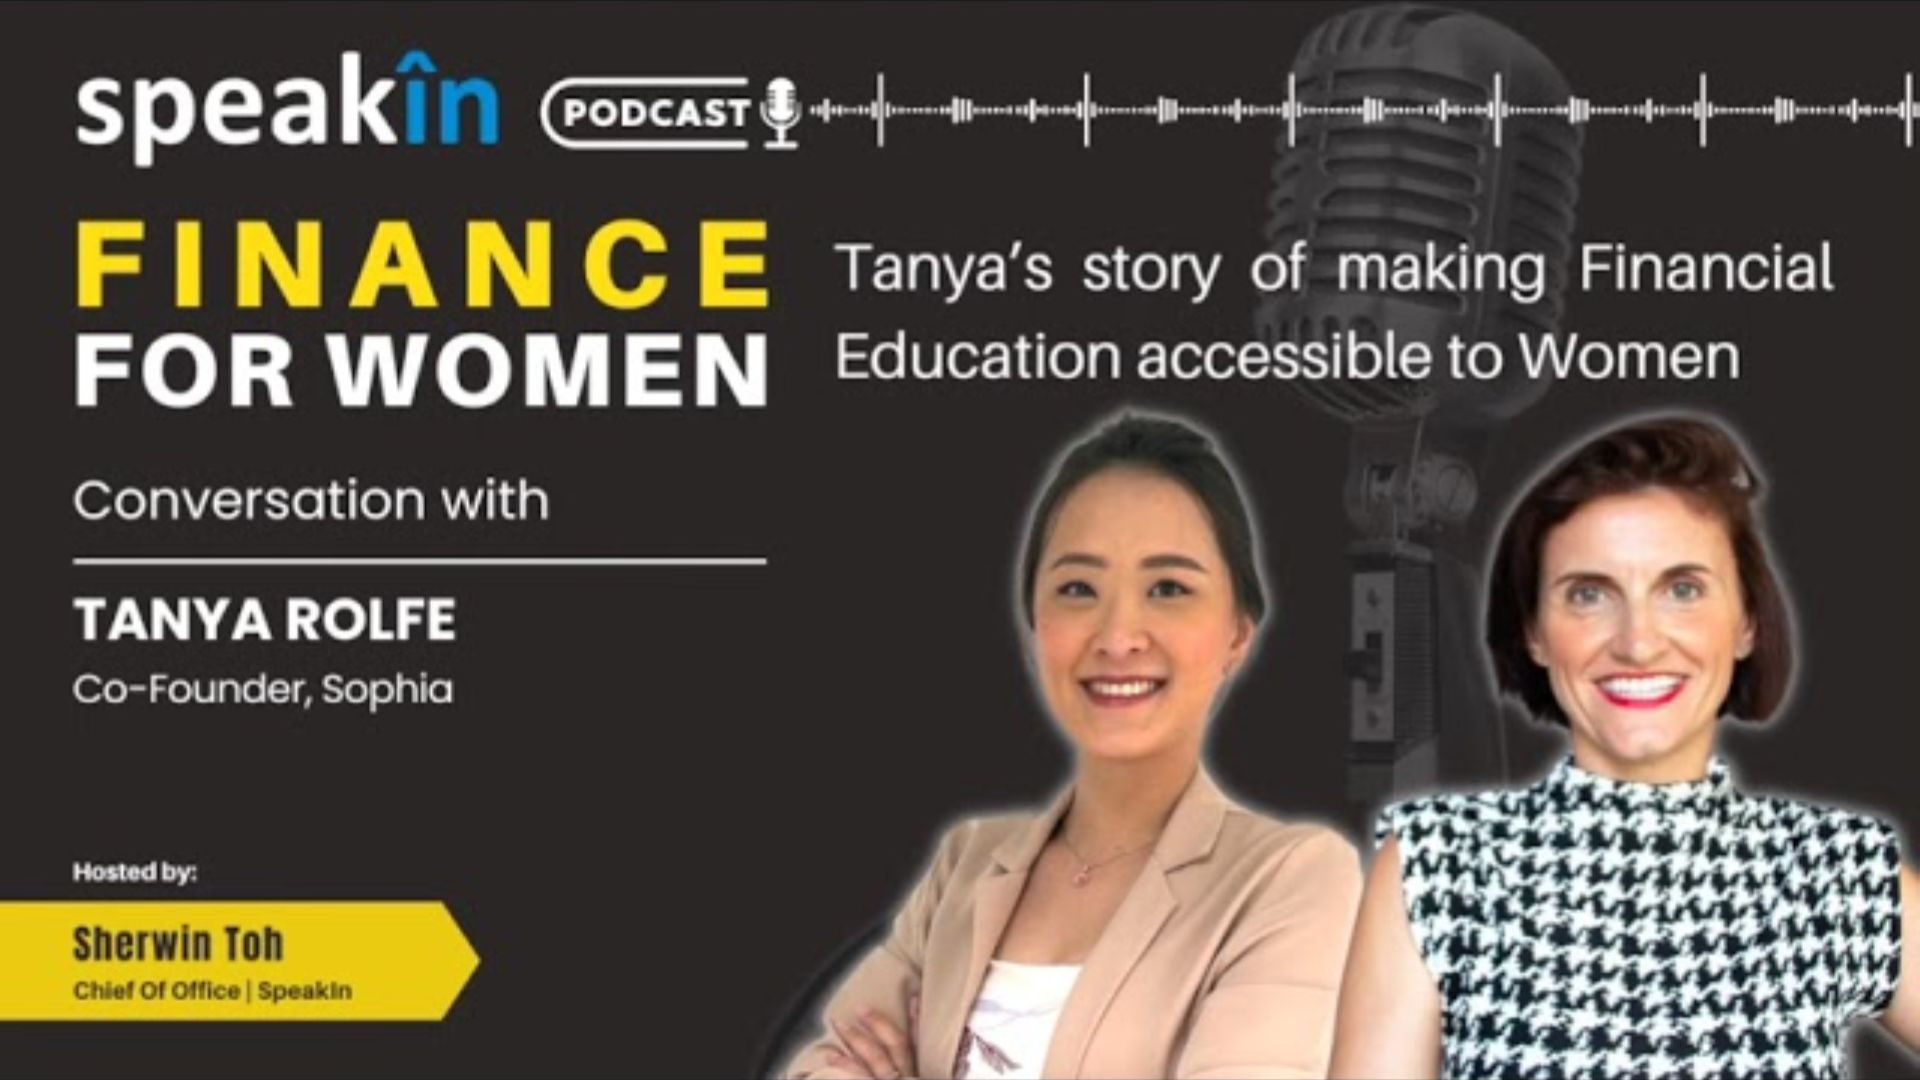 SpeakIn Podcast: Tanya Rolfe talks about Finance for Women